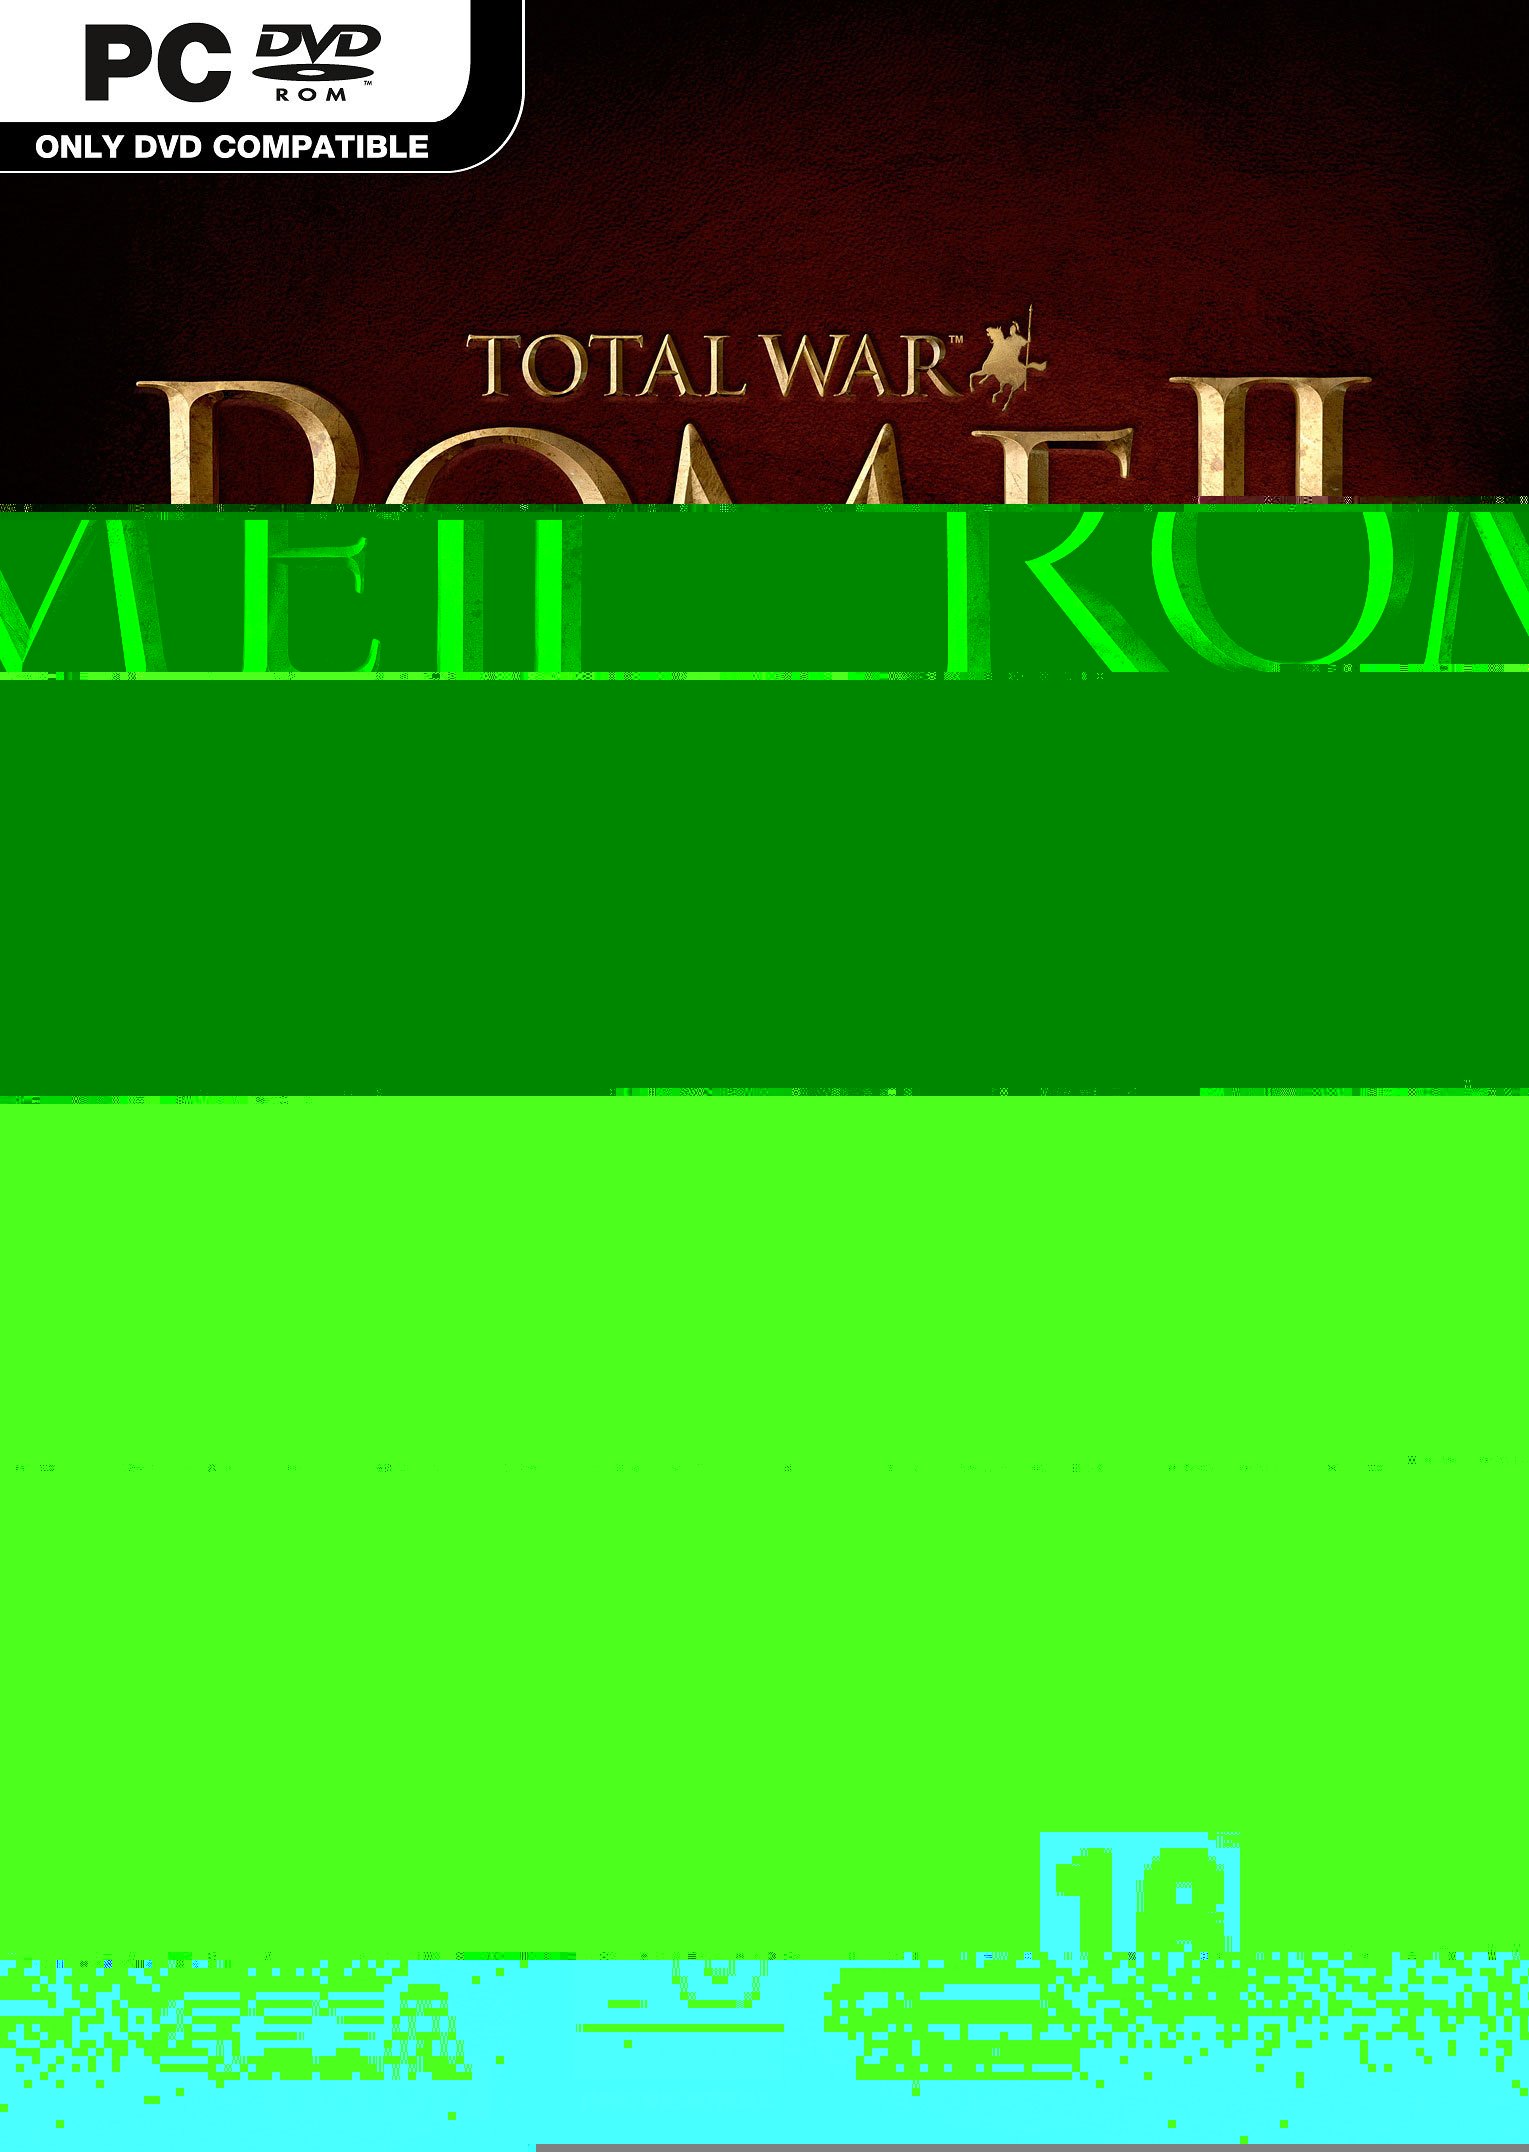 Total War Rome II.jpg